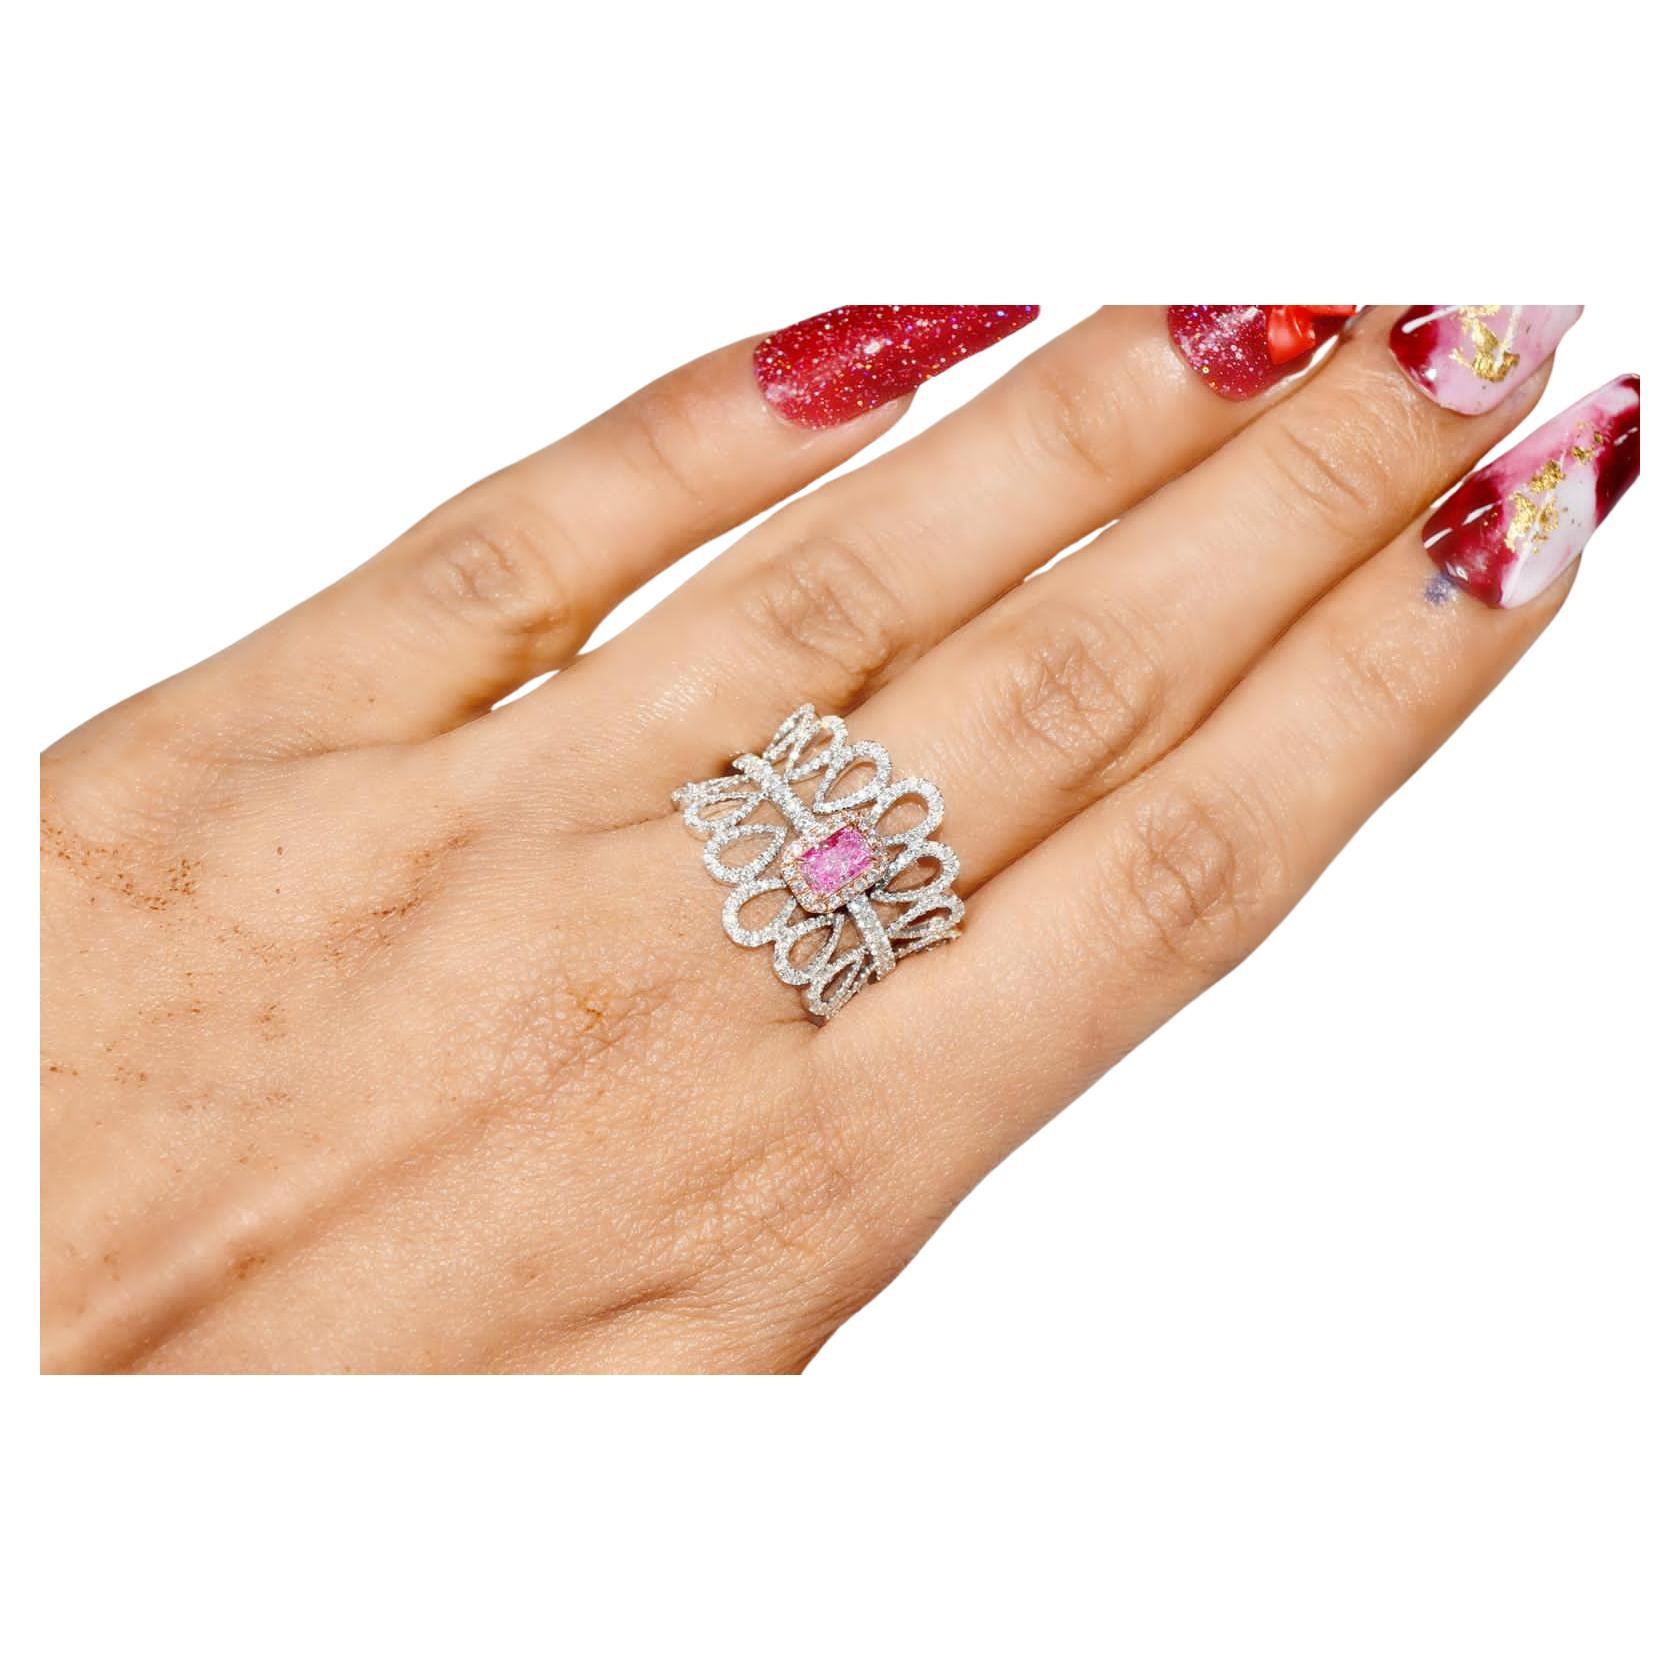 0.40 Carat Very Light Pink Diamond Ring SI2 Clarity GIA Certified